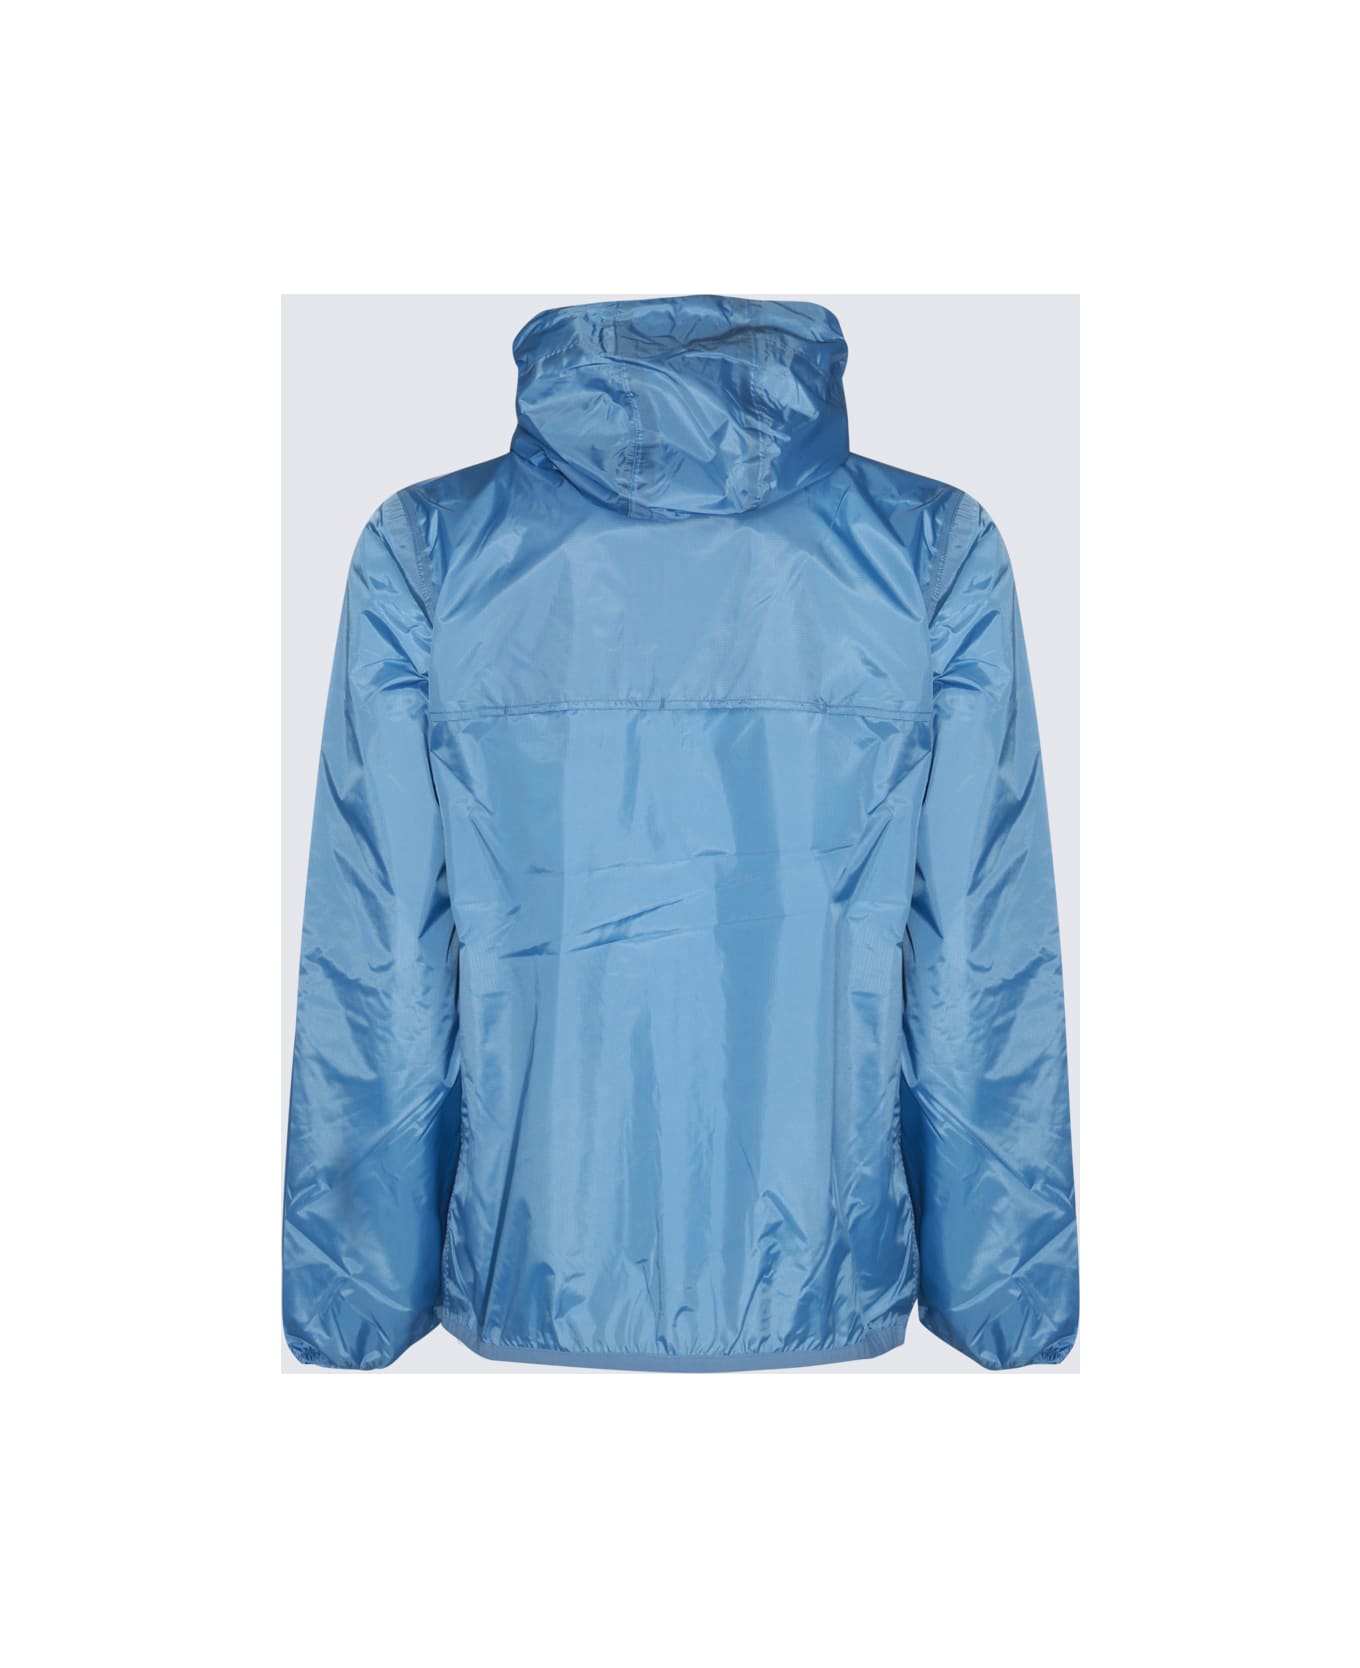 Maison Kitsuné Light Blue Casual Jacket - Blue ジャケット